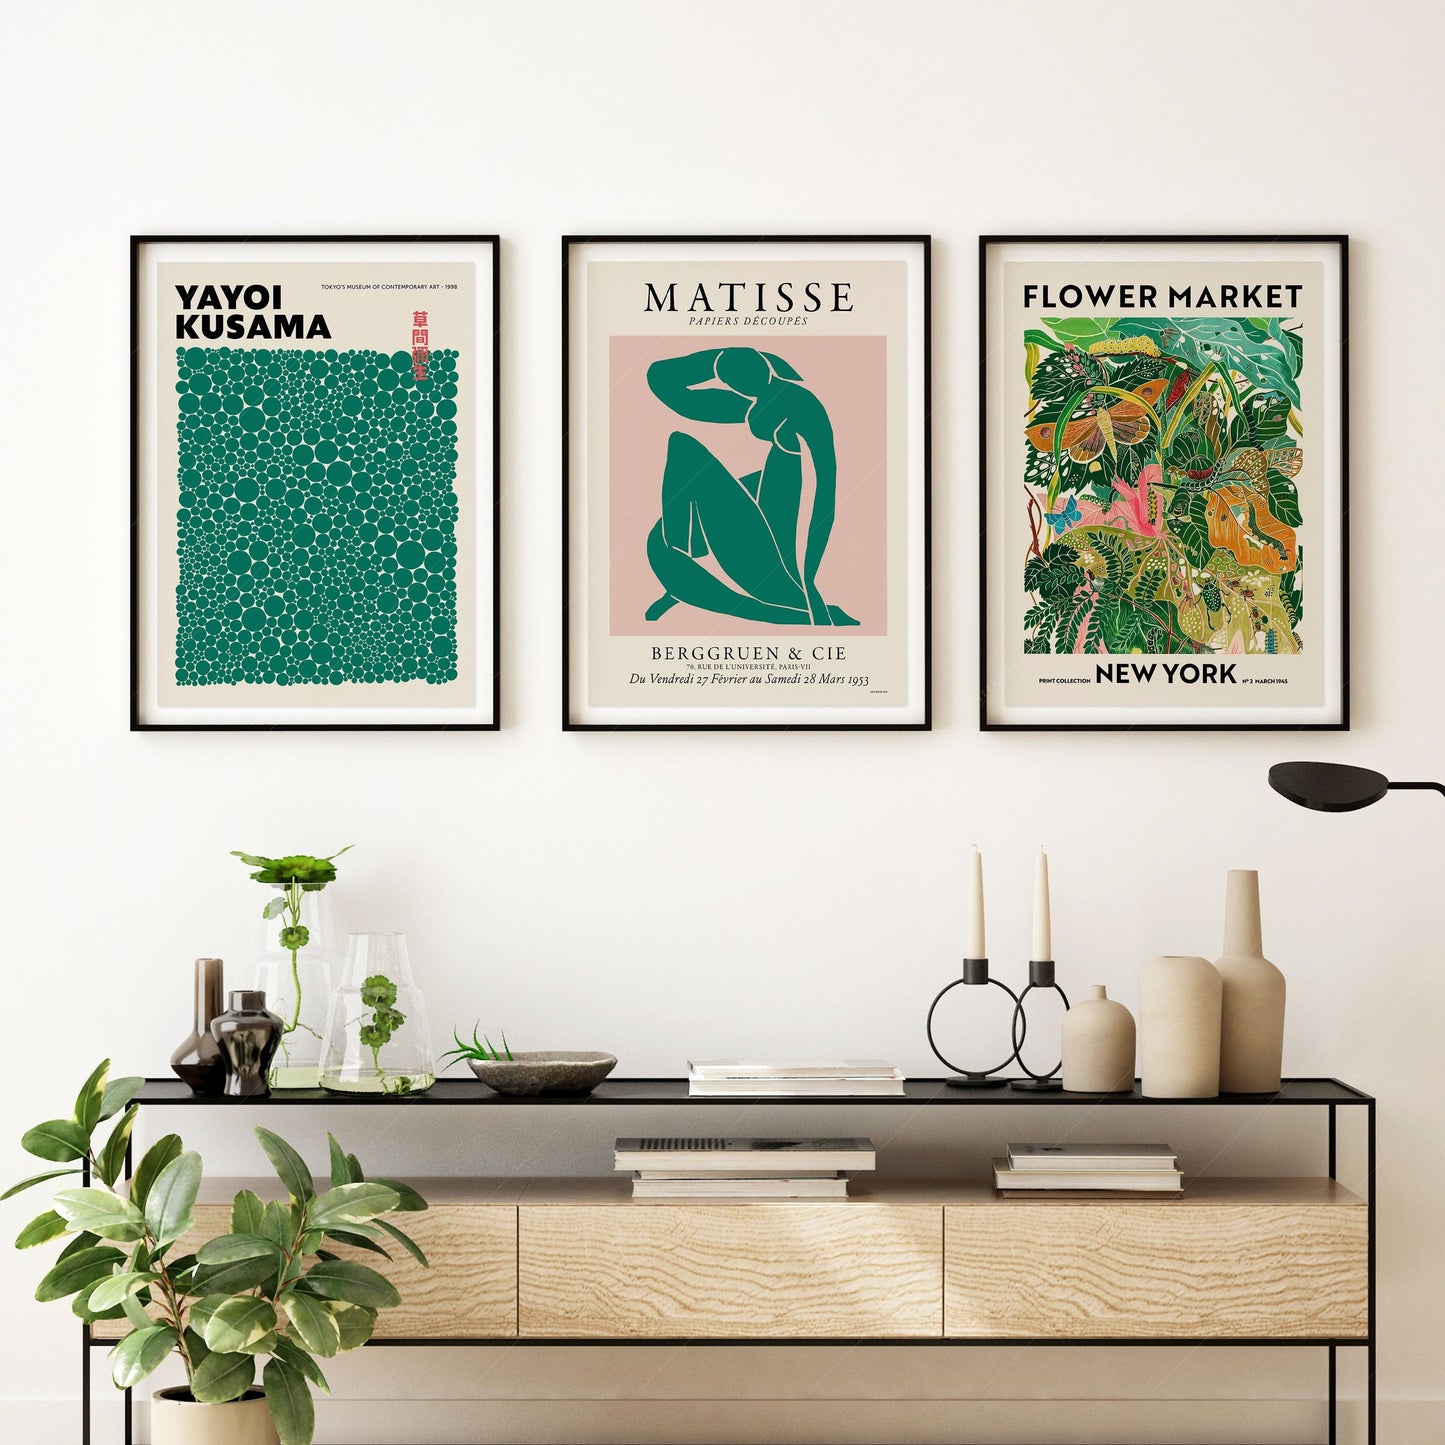 Home Poster Decor Henri Matisse, Modern Gallery Wall, Set of 3 Prints, Matisse, Yayoi Kusama, Flower Market, Dark Green and Light Pink